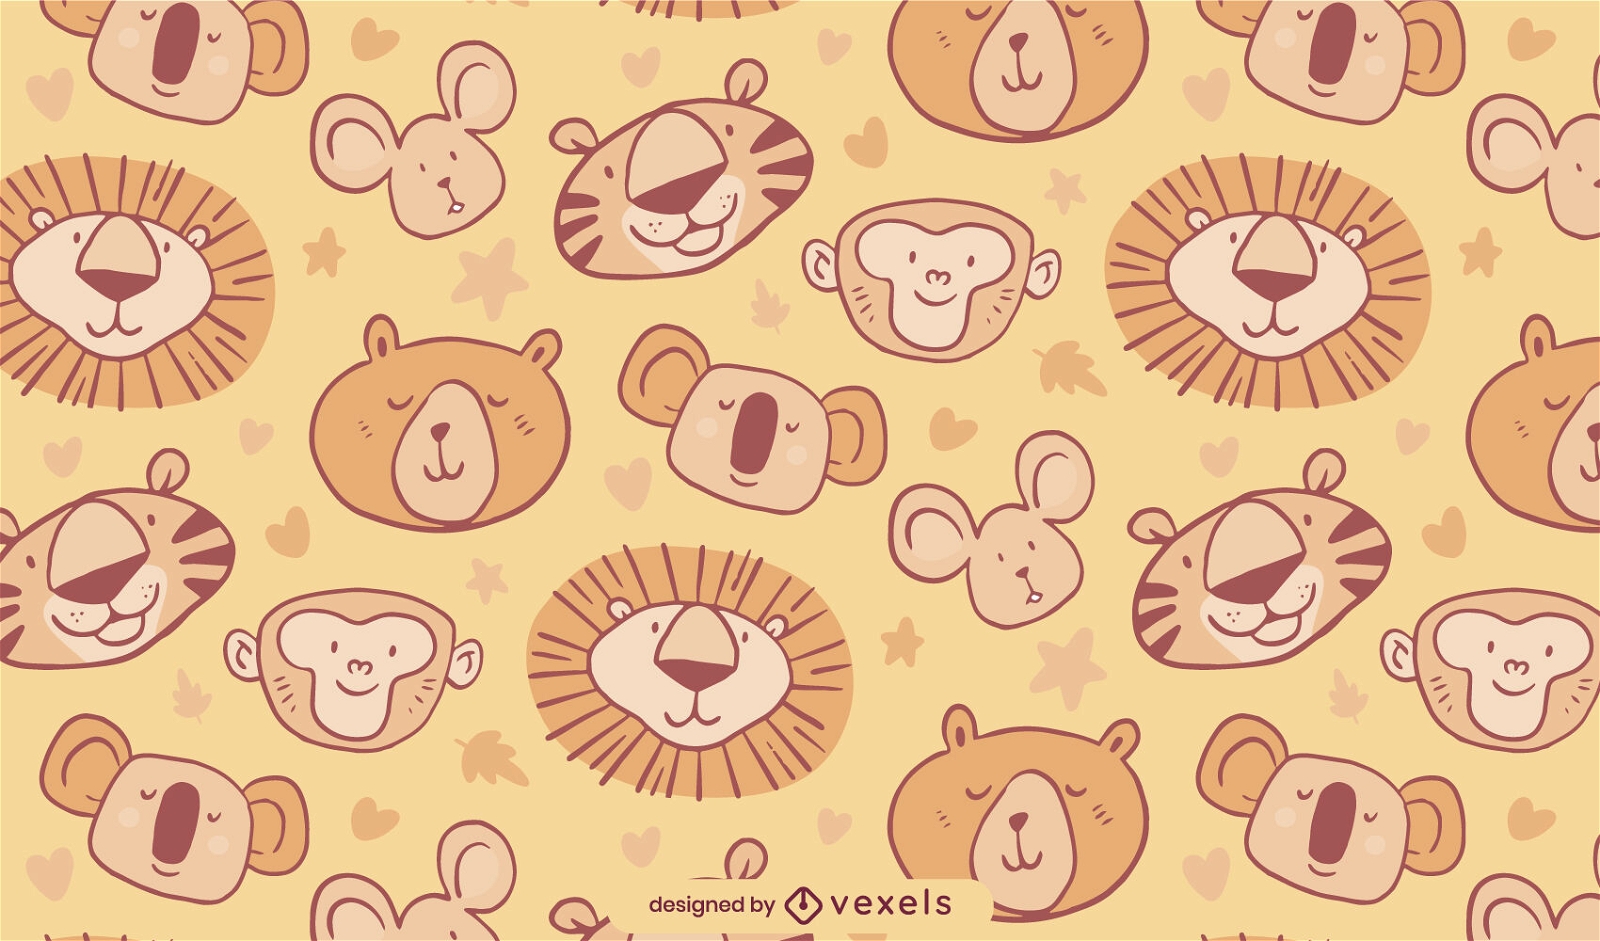 Cute wild animal heads pattern design